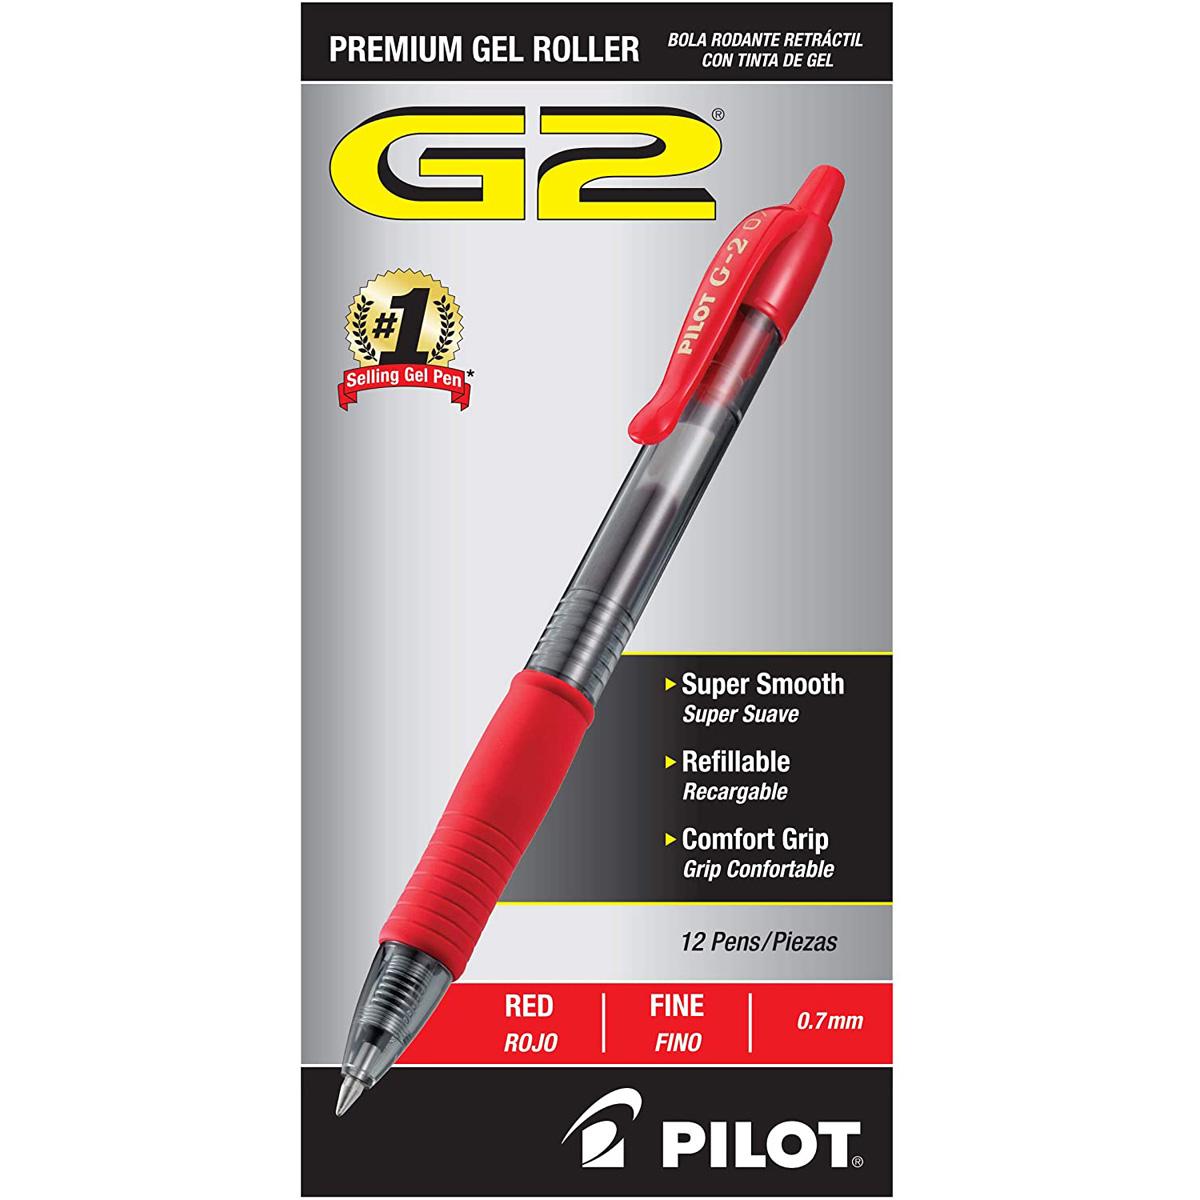 12 Pilot G2 Premium Refillable Retractable Rolling Ball Fine Point Gel Pen for $6.36